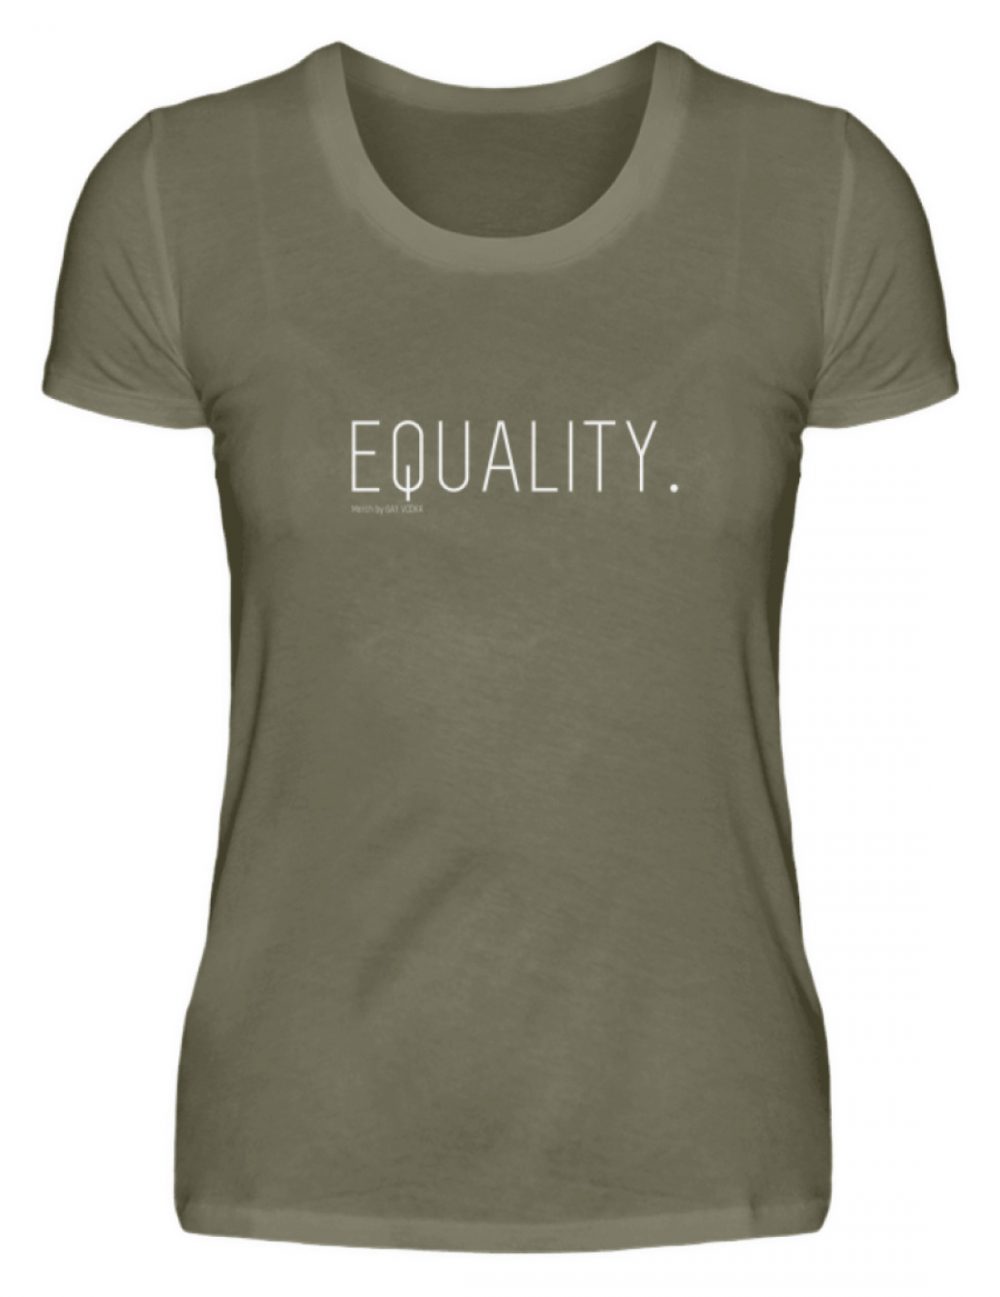 EQUALITY. - Damen Premiumshirt-627